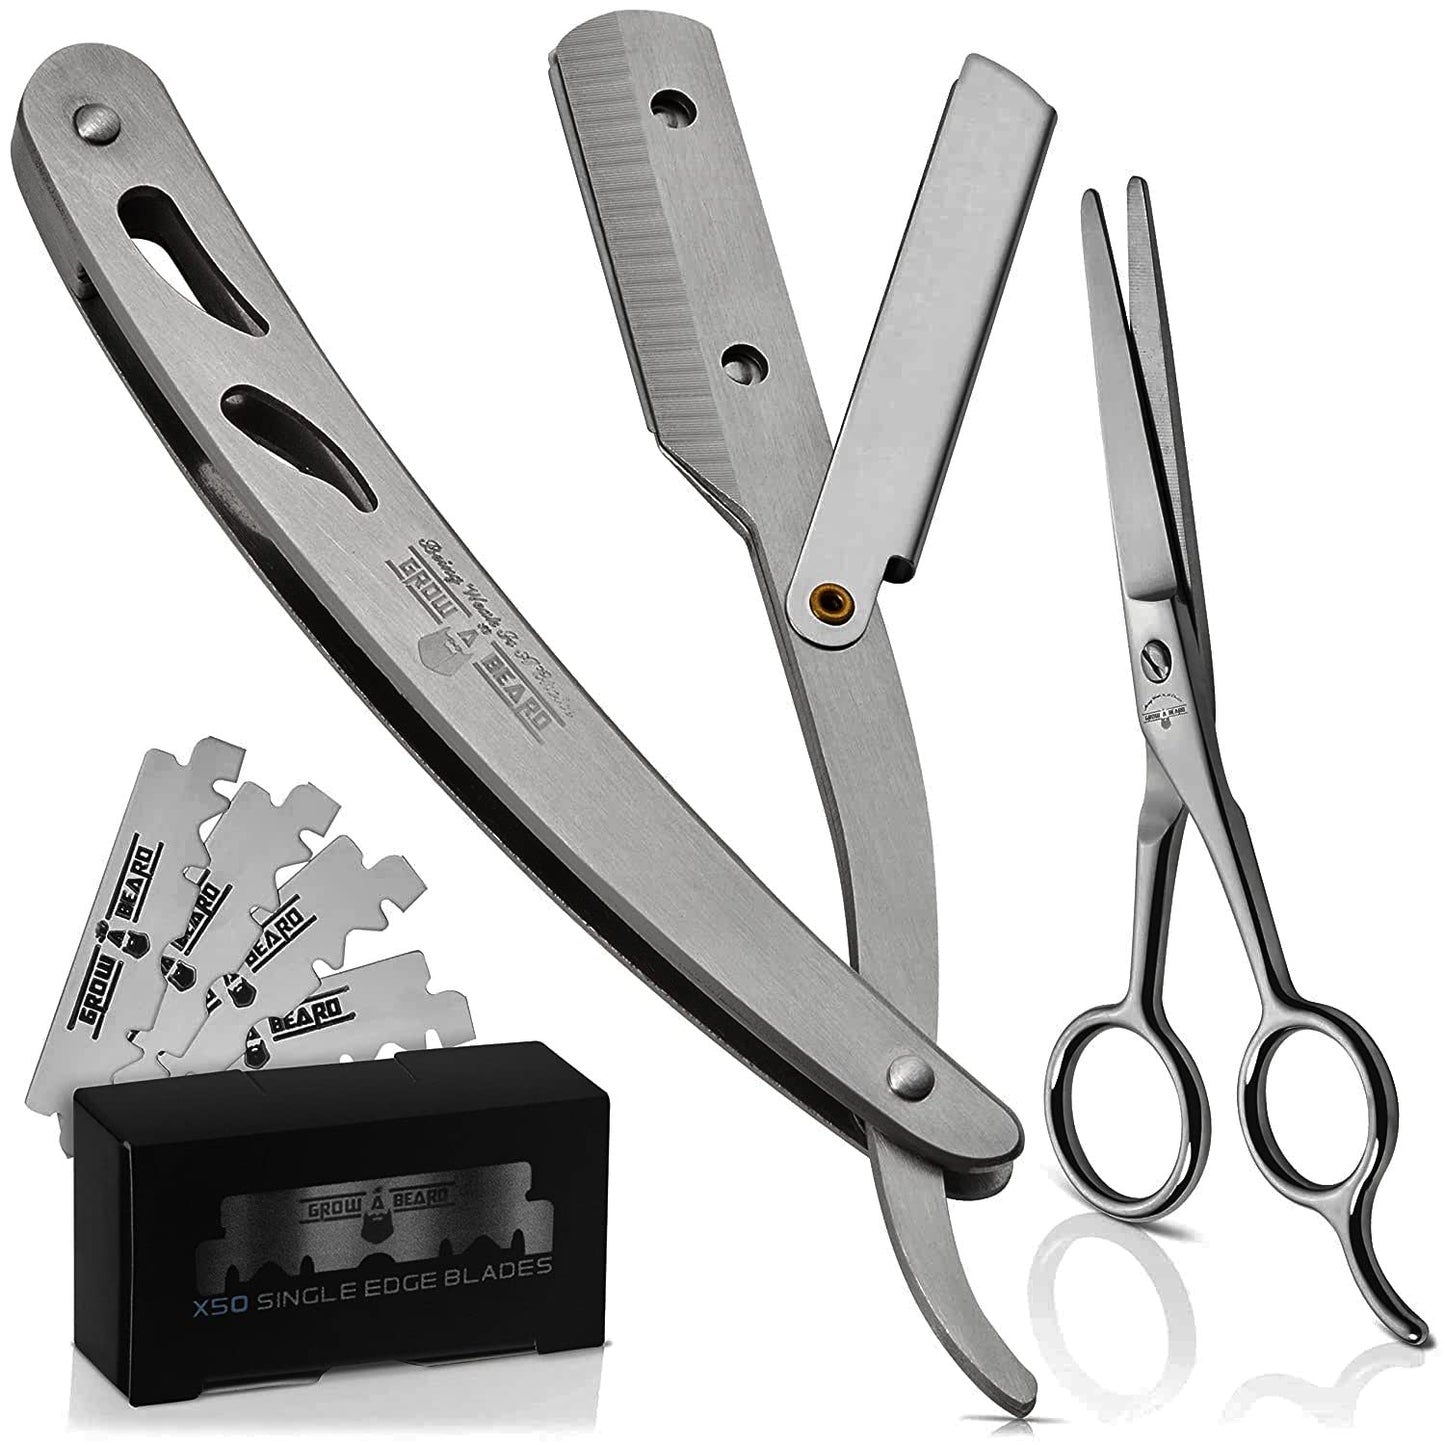 KD Straight Complete Razor with 50 Single Blades & Scissors